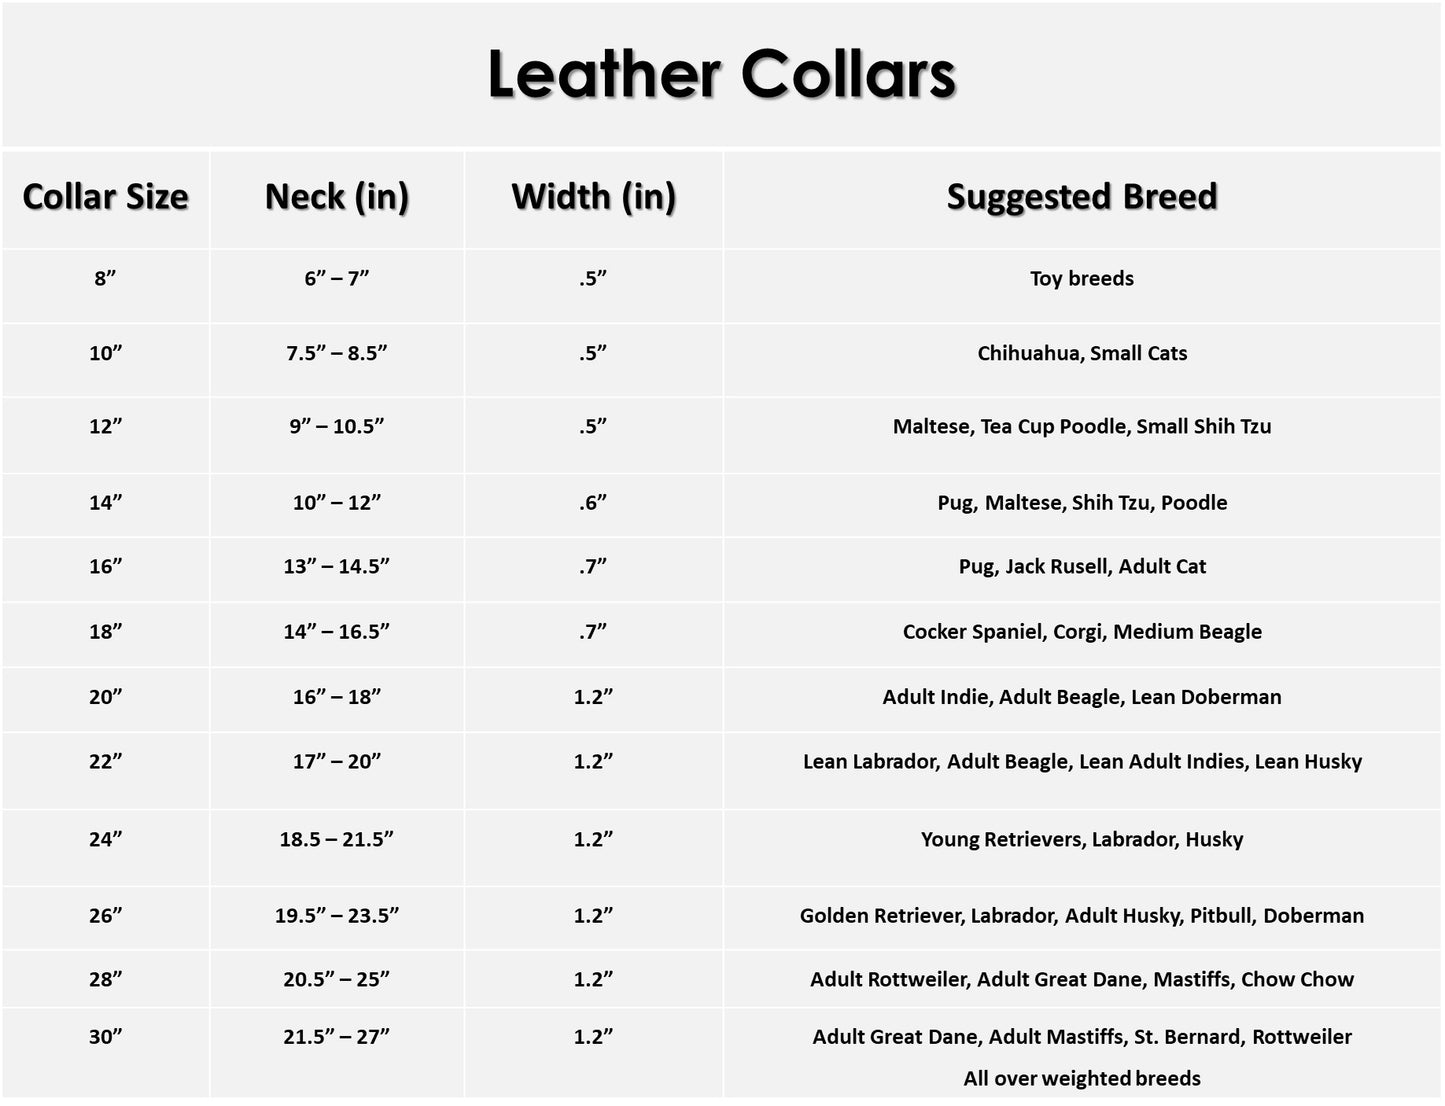 Leather Collar 30"